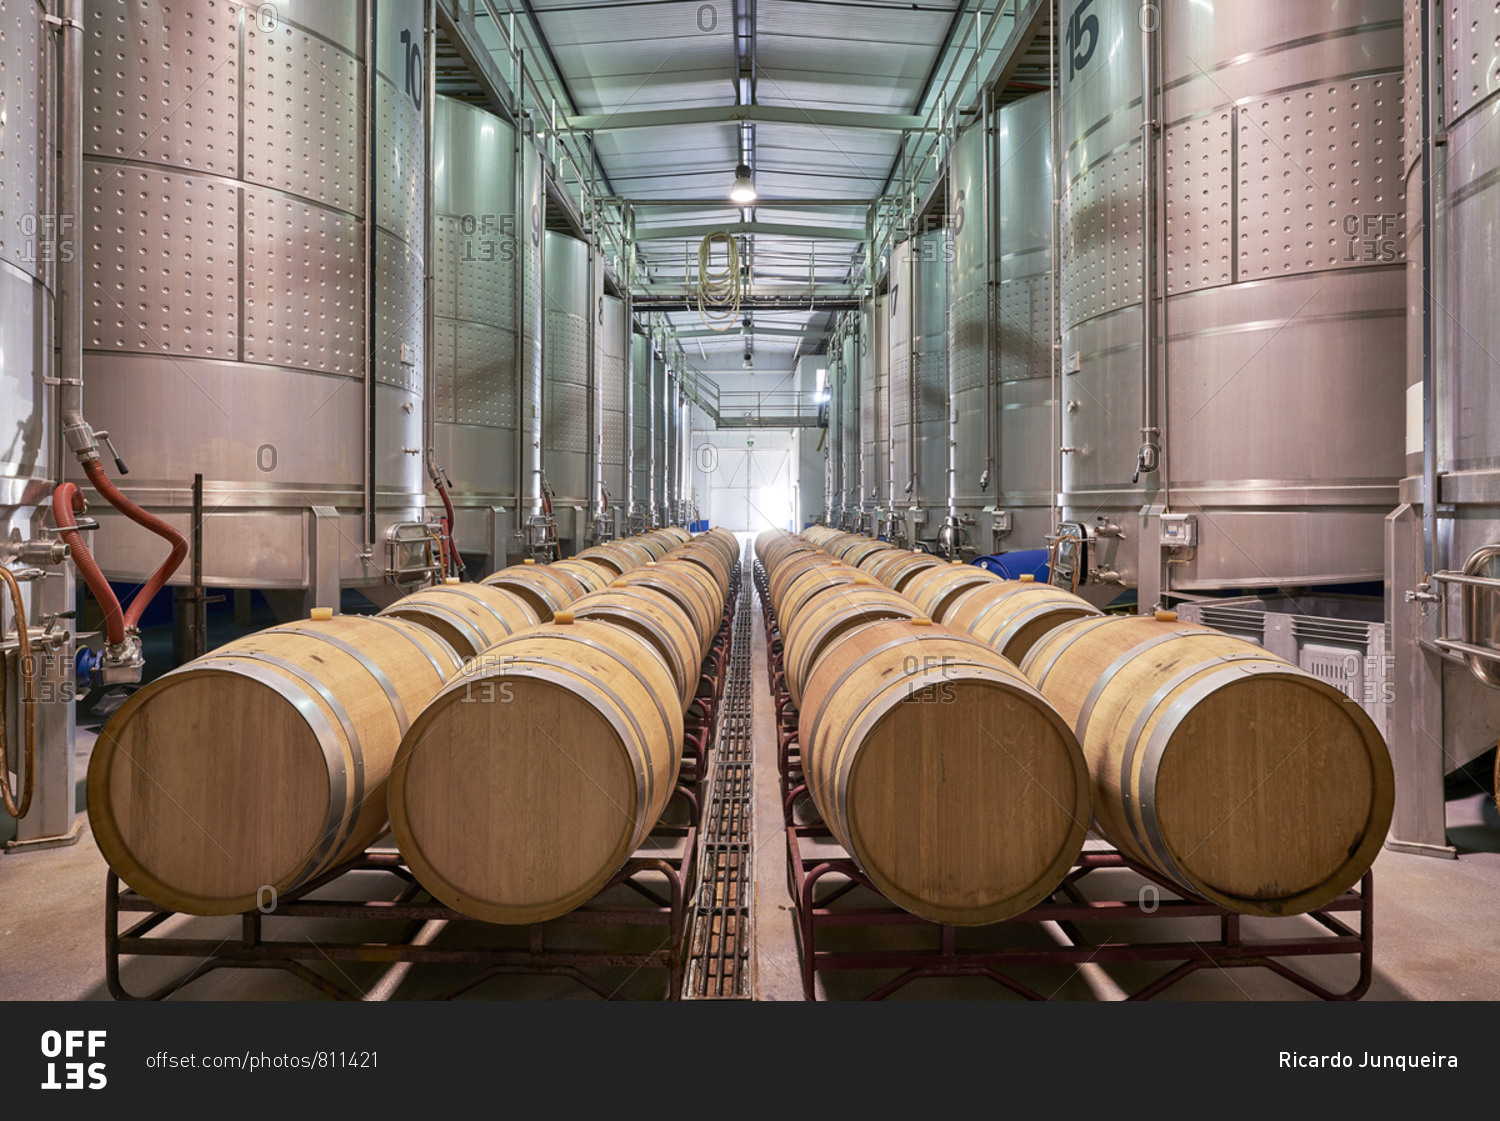 Fermentation tanks and aging wine barrels